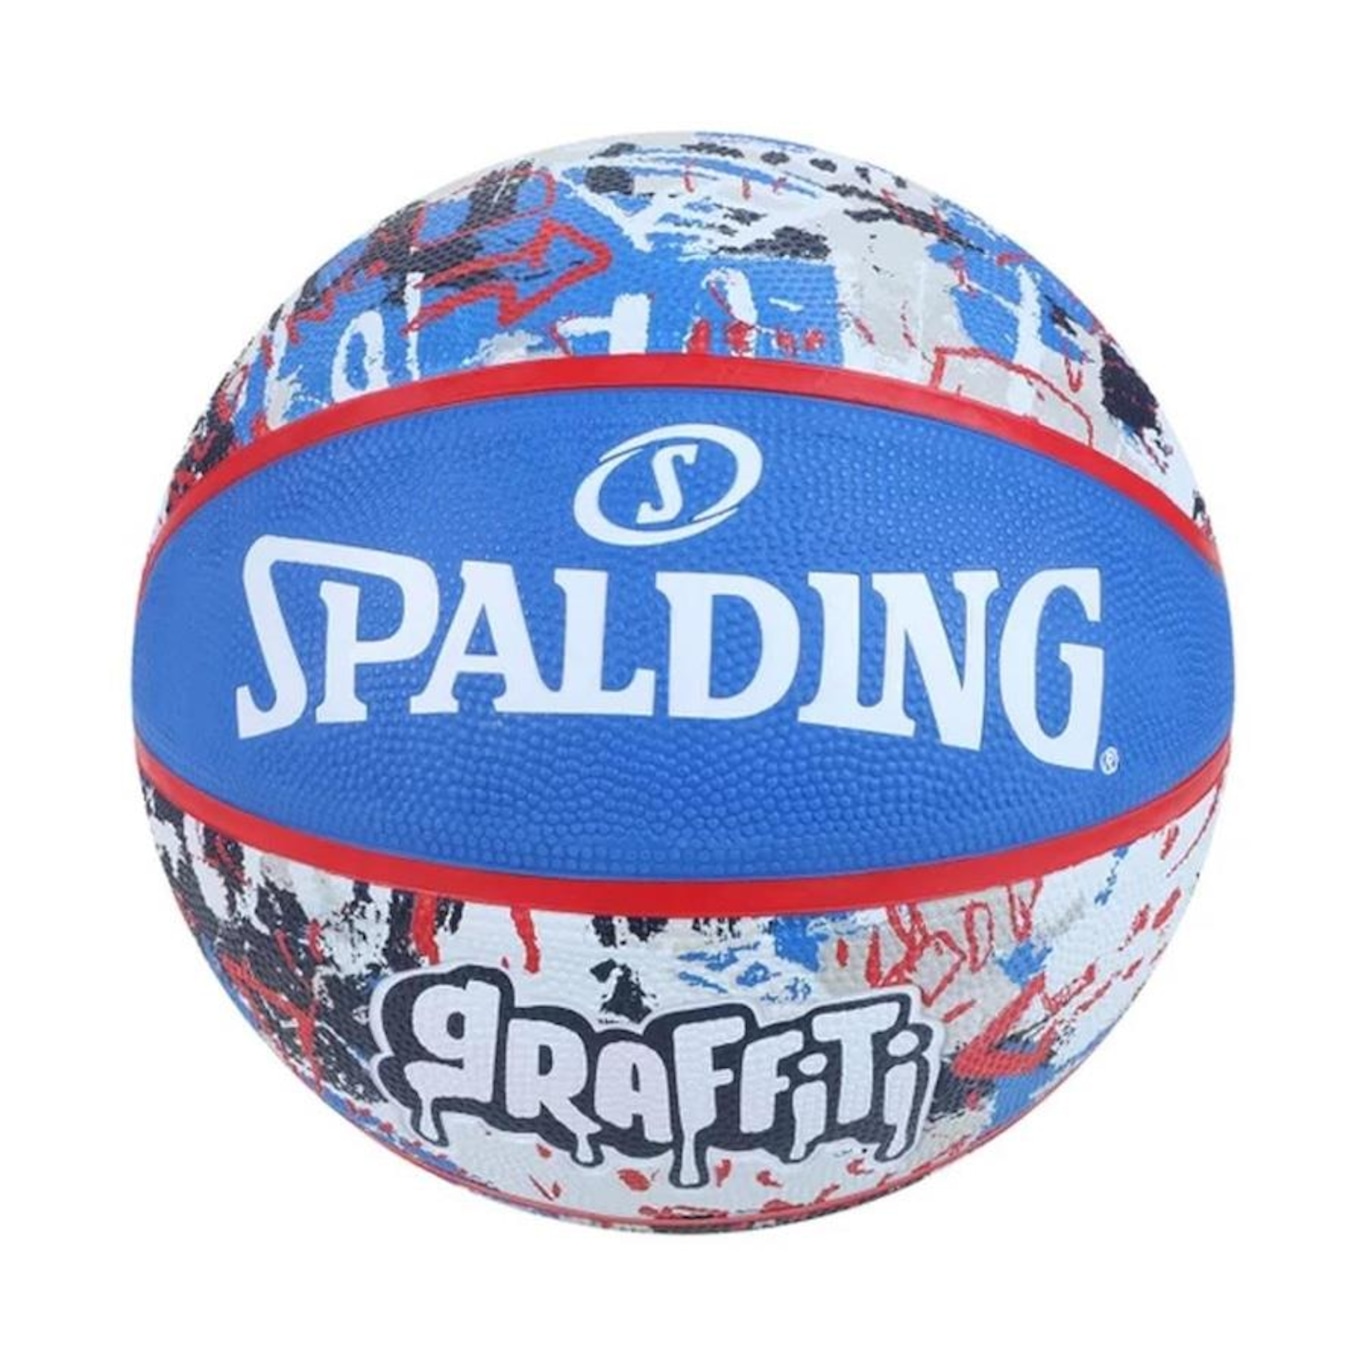 Bola Basquete Spalding Slam Dunk, laranja, 7